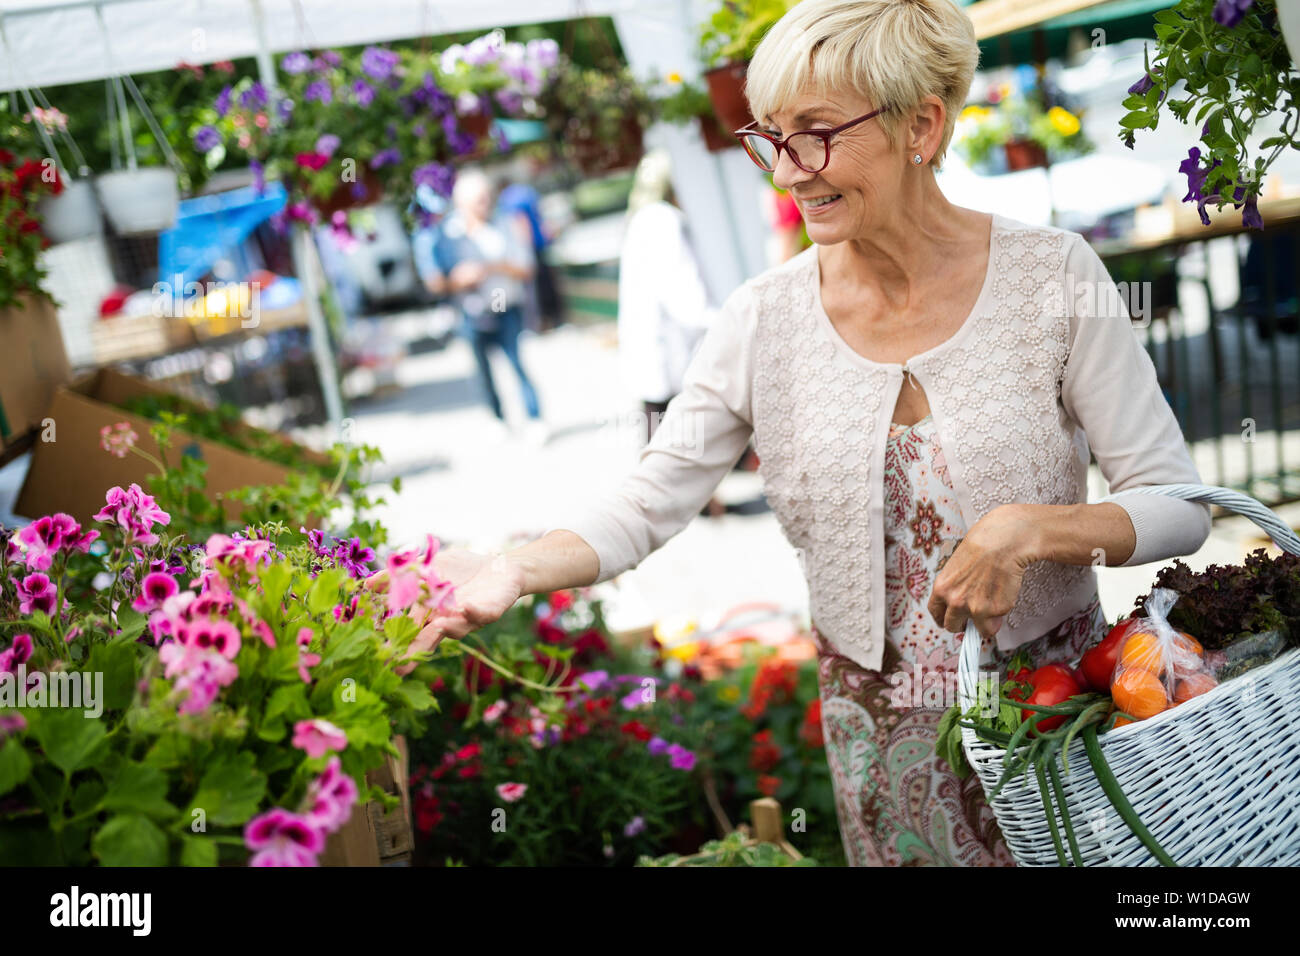 Senior lady shopping for flowers at garden center smiling Stock Photo